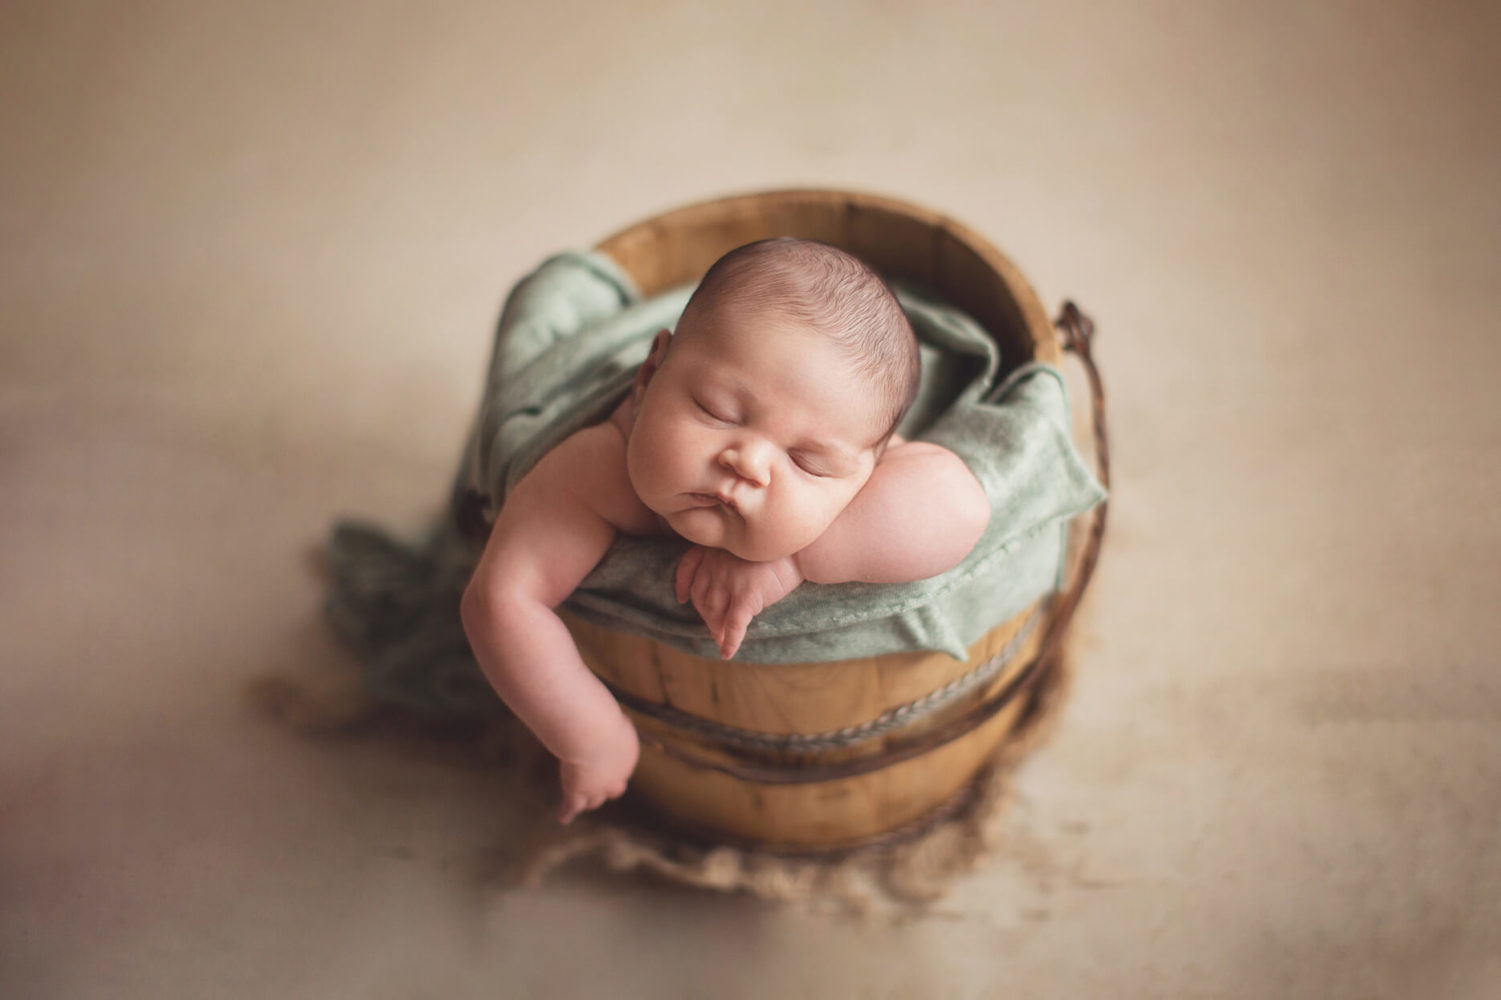 How to pose newborn baby in bucket